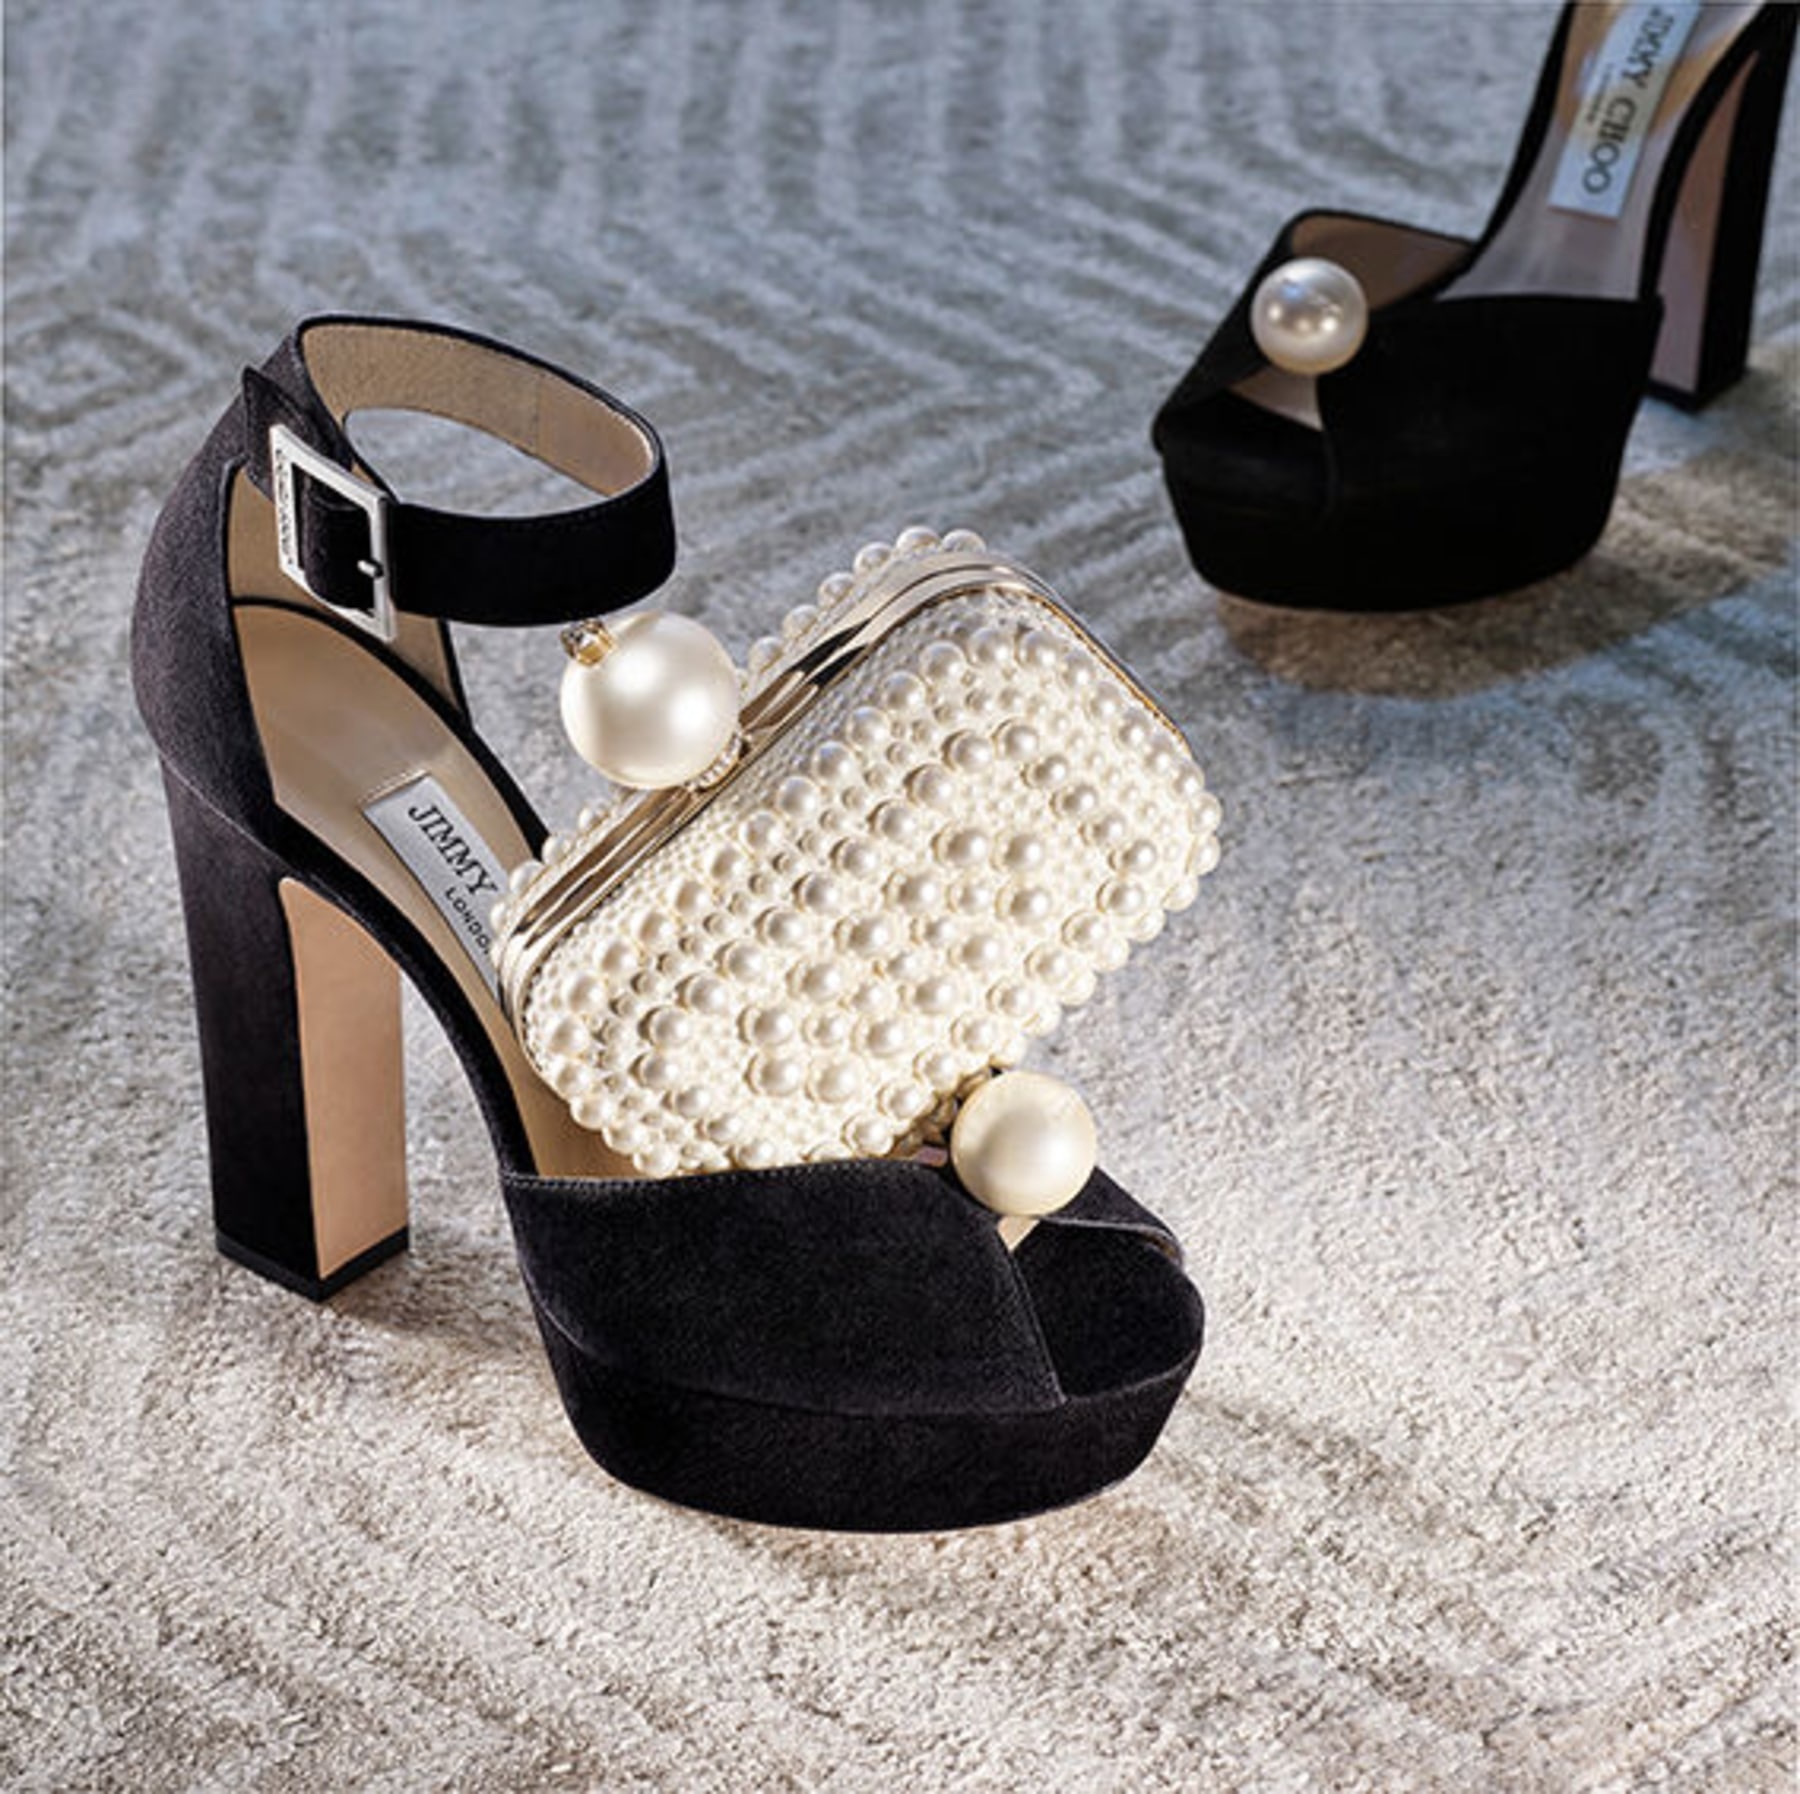 Socorie 120
Black Suede Platform Sandals with Pearl Detailing - 7